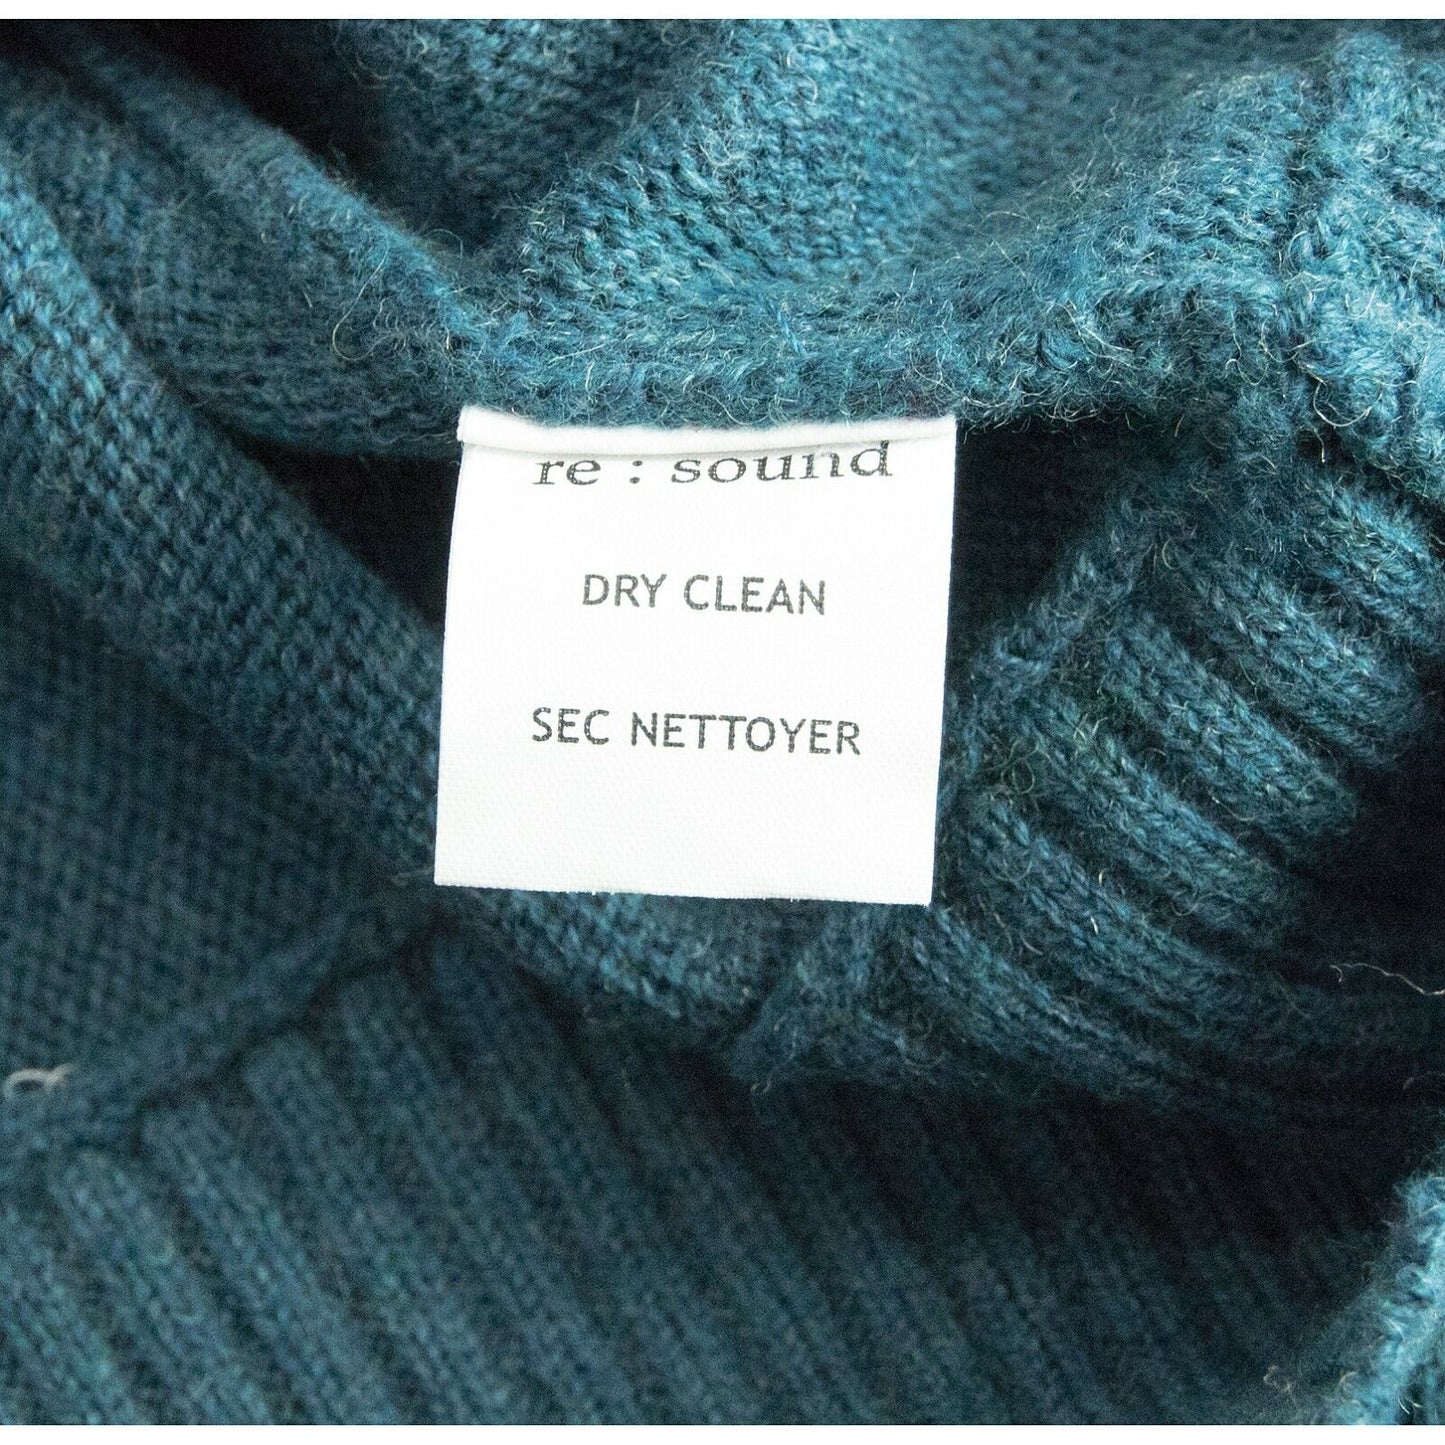 Re:sound Teal Blue Multi Woven Knit Open Back Dolman Long Sleeve Sweater XL NWT